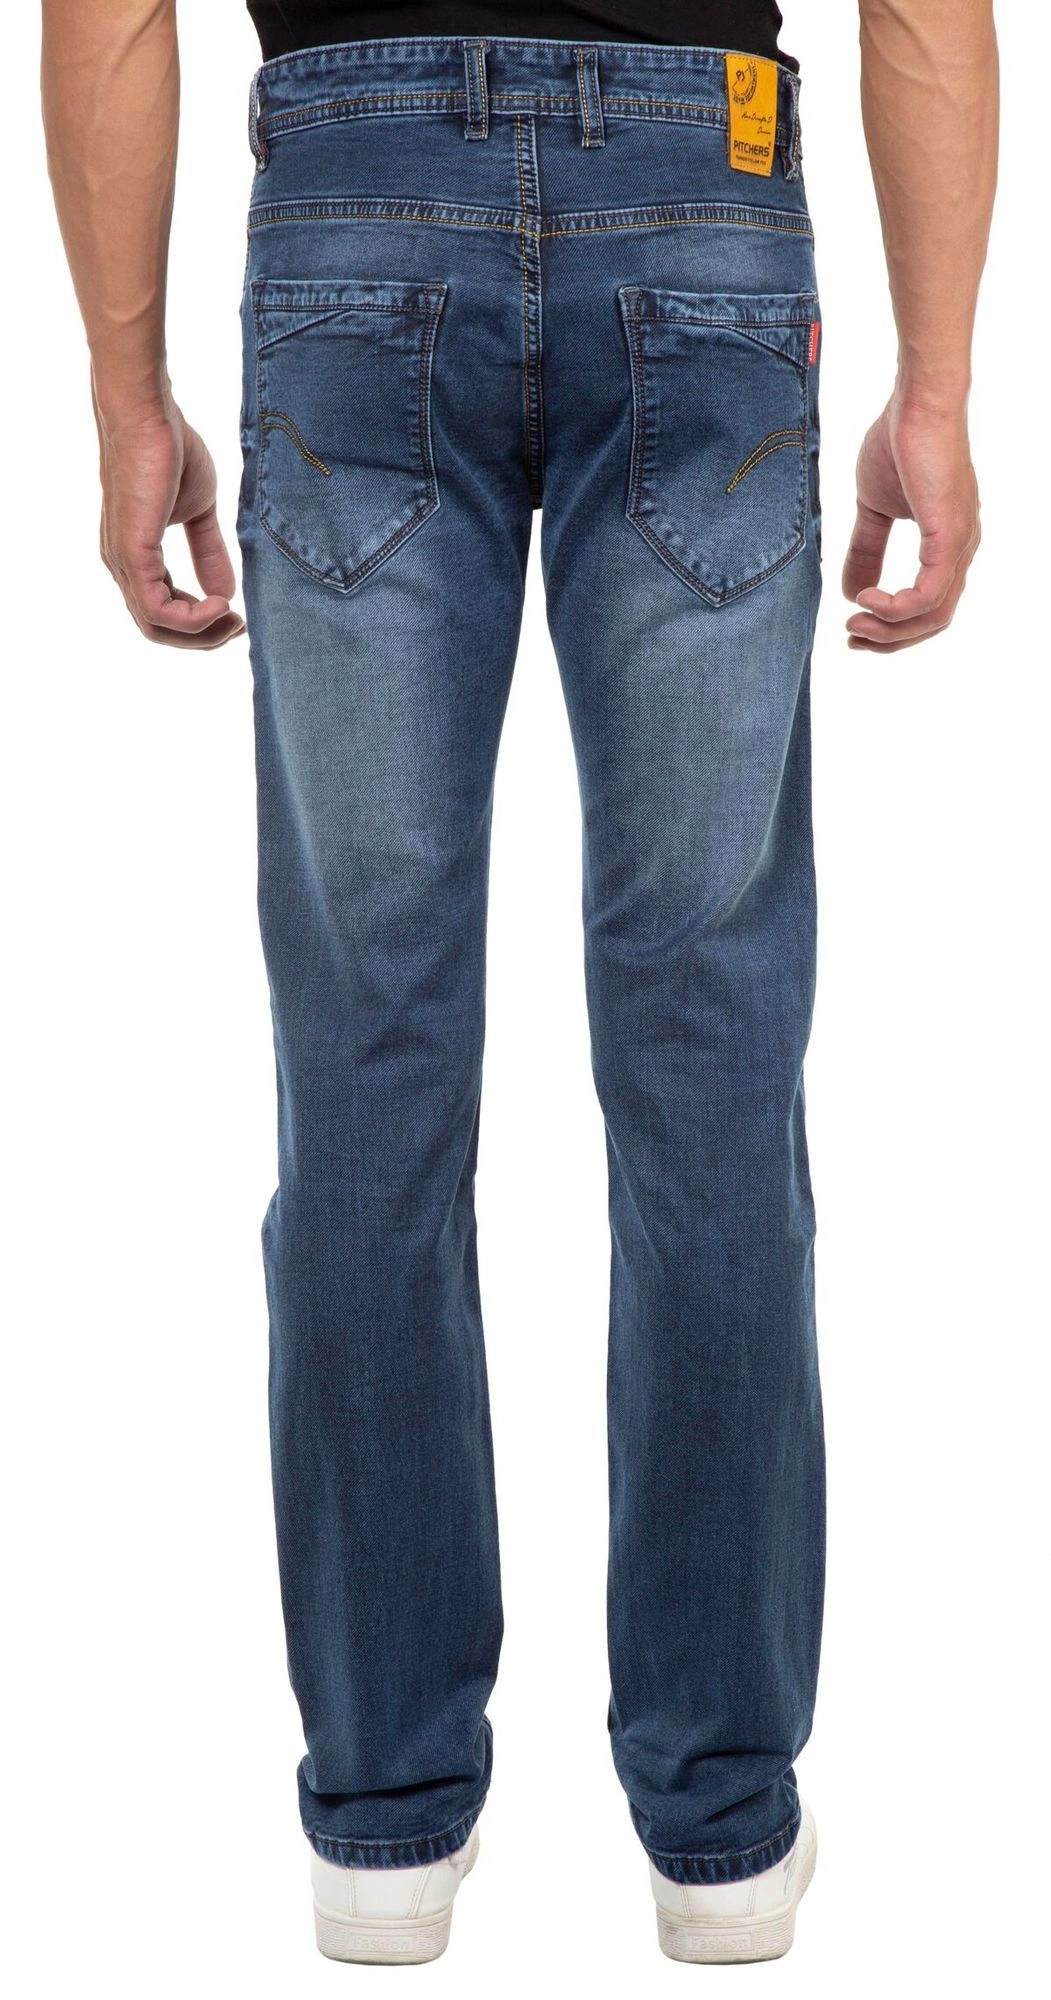 Denim Jeans Pant For Men - Blue